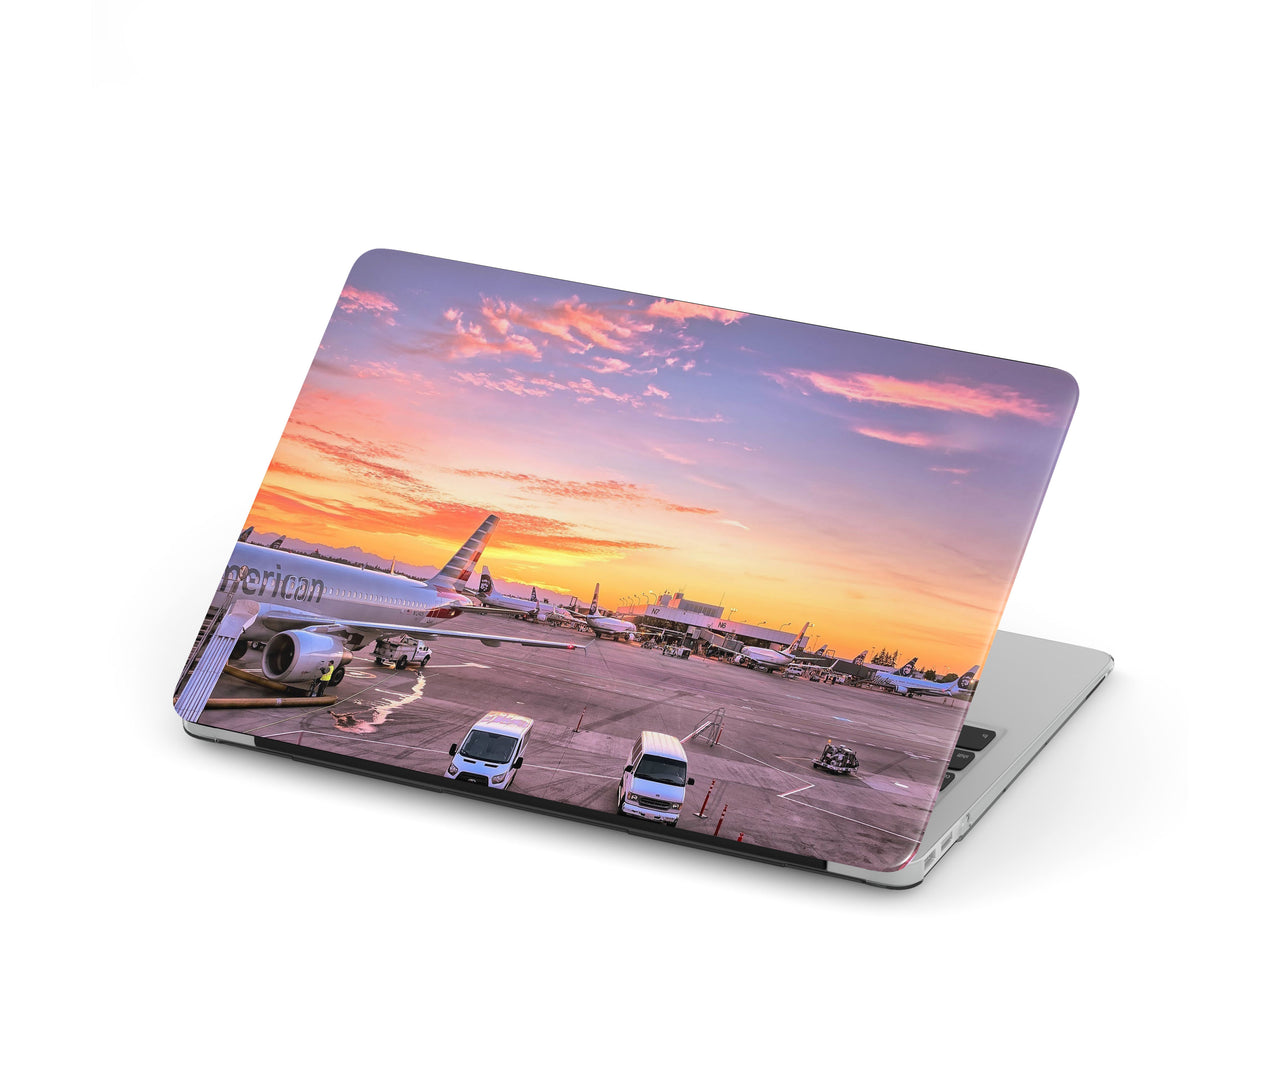 Airport Photo During Sunset Designed Macbook Cases